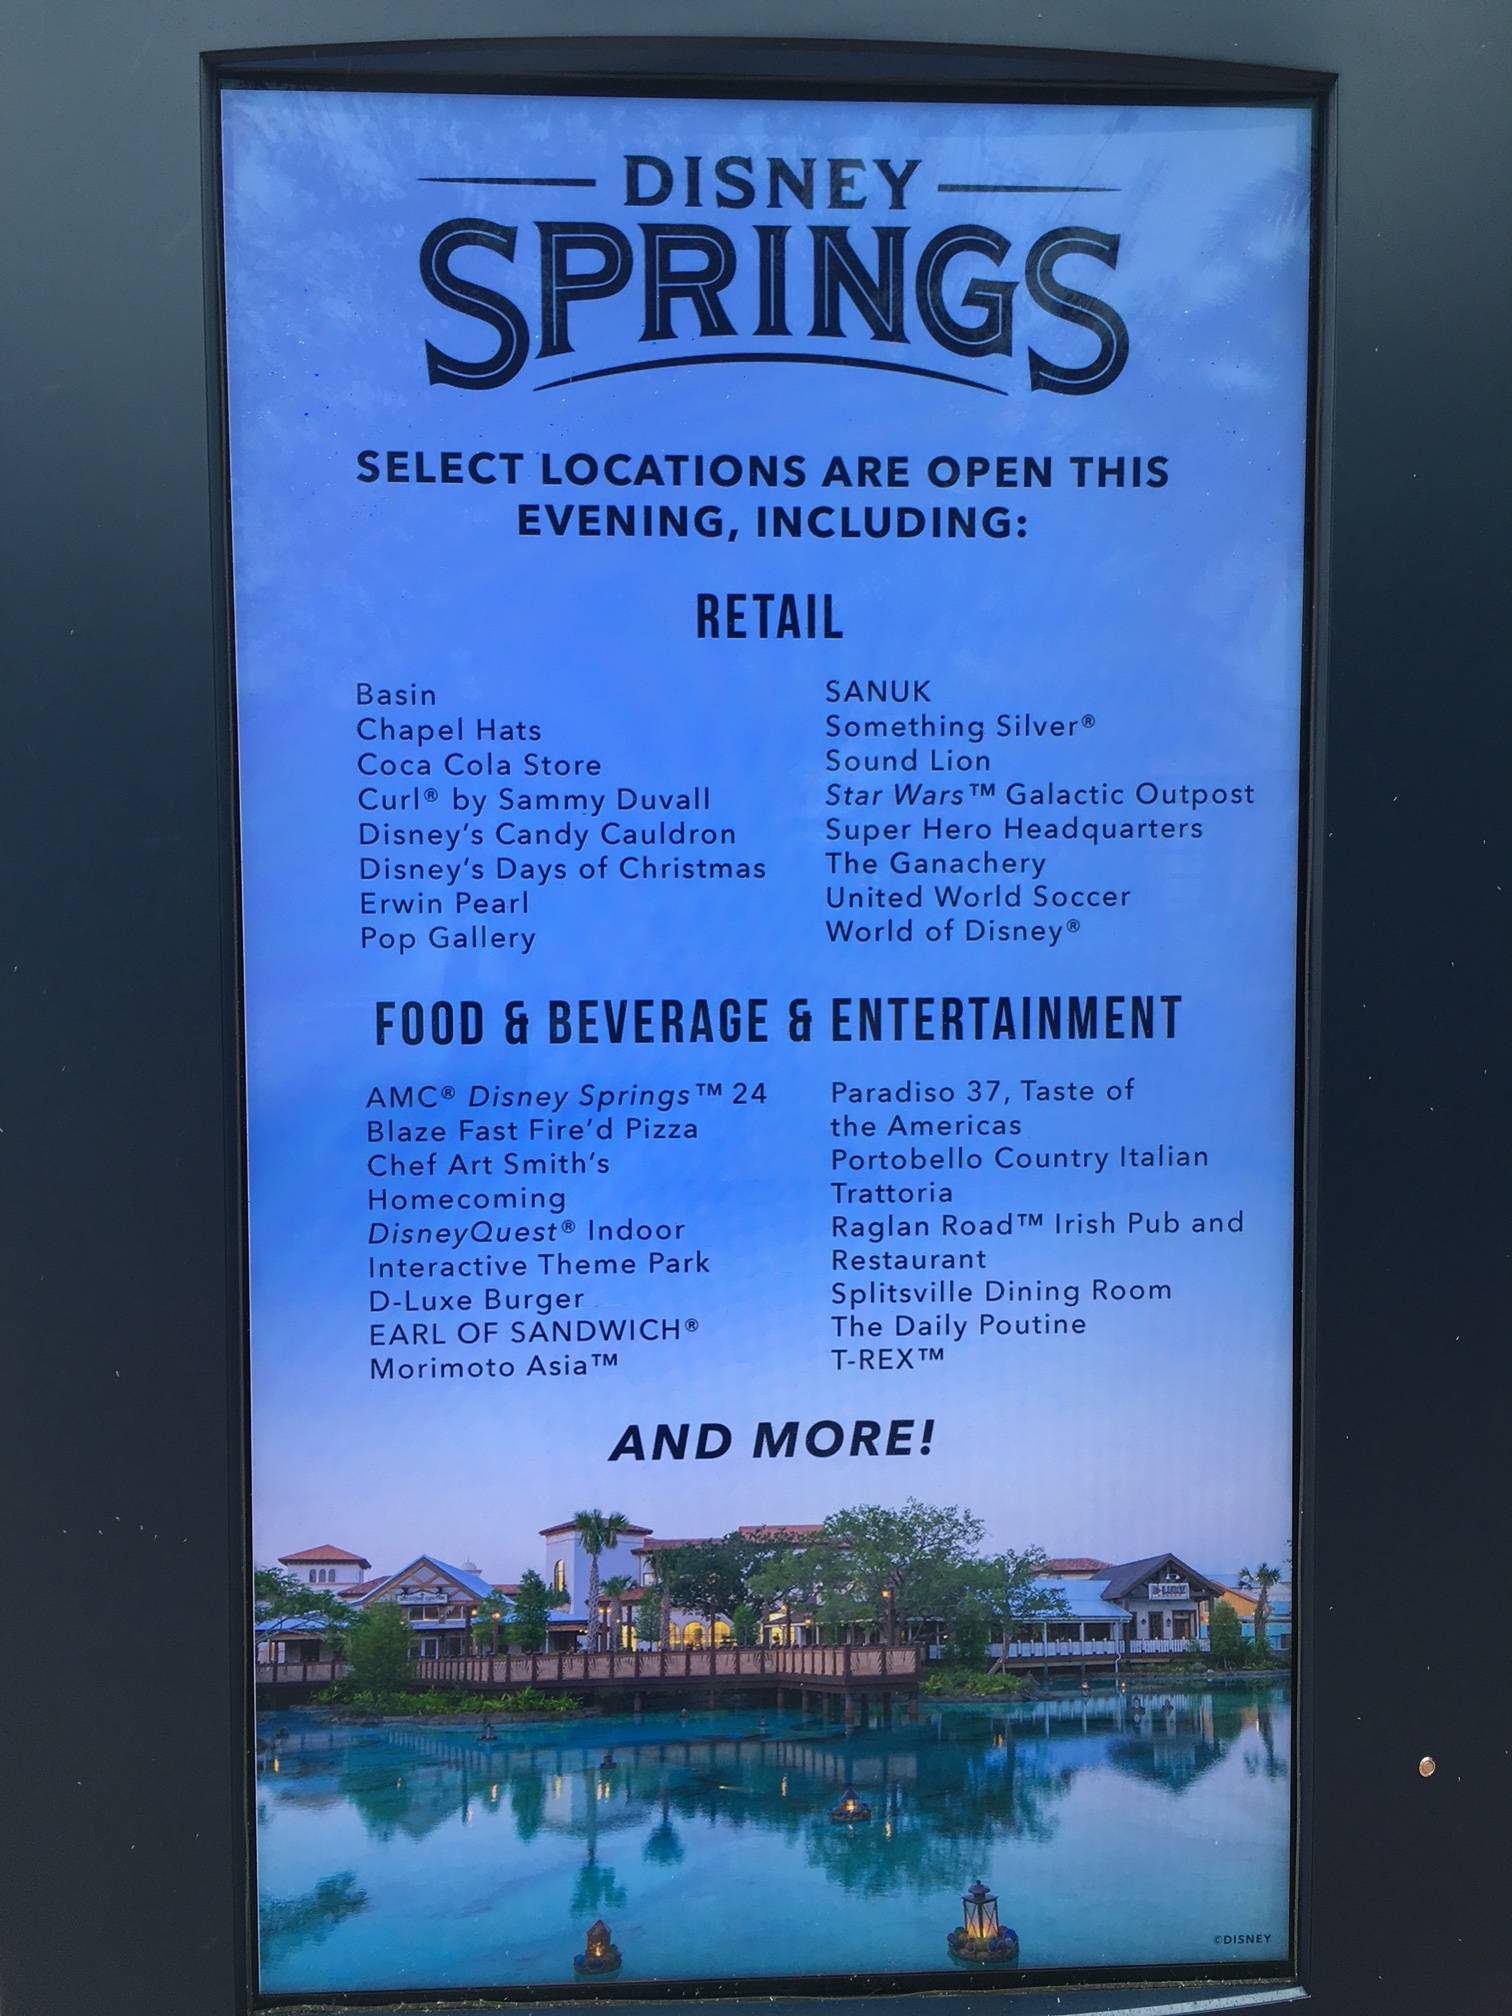 Disney Springs post Hurricane Matthew restaurants and shops operating